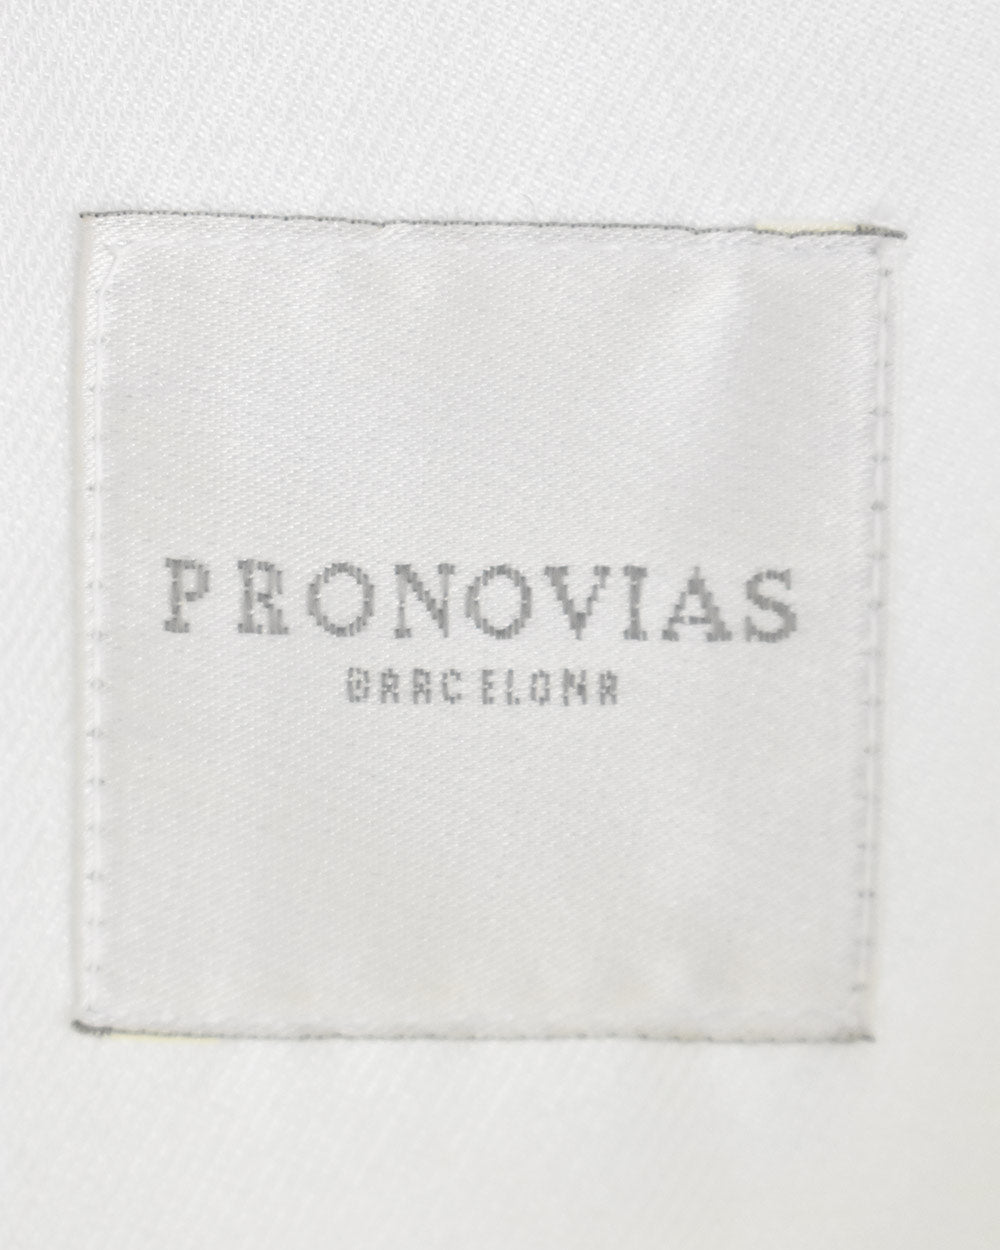 Pronovias Ivory A Line Wedding Dress with Veil Size 12